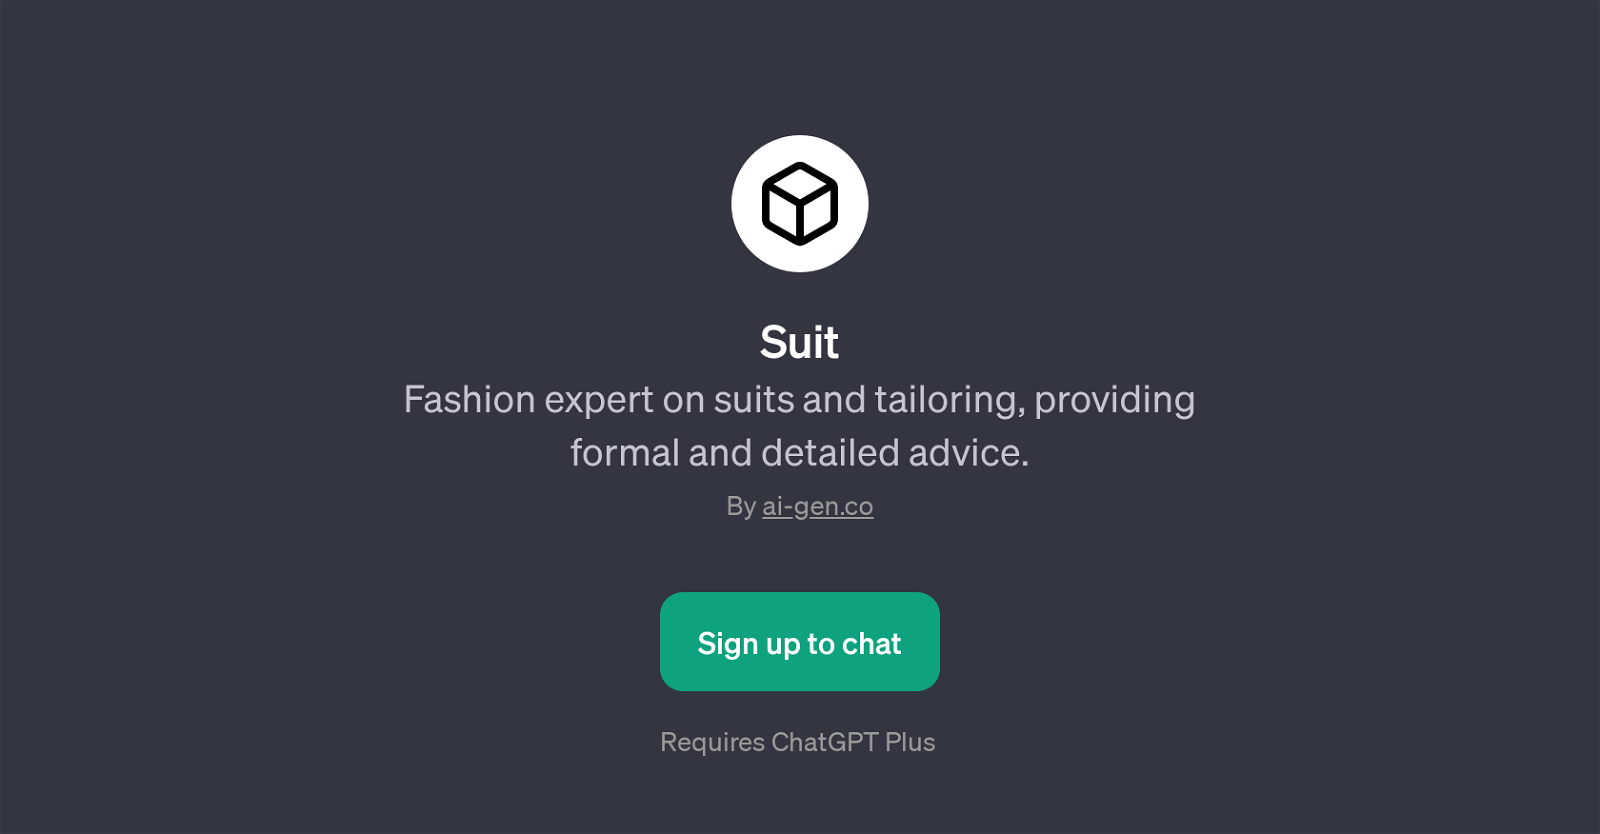 Suit website